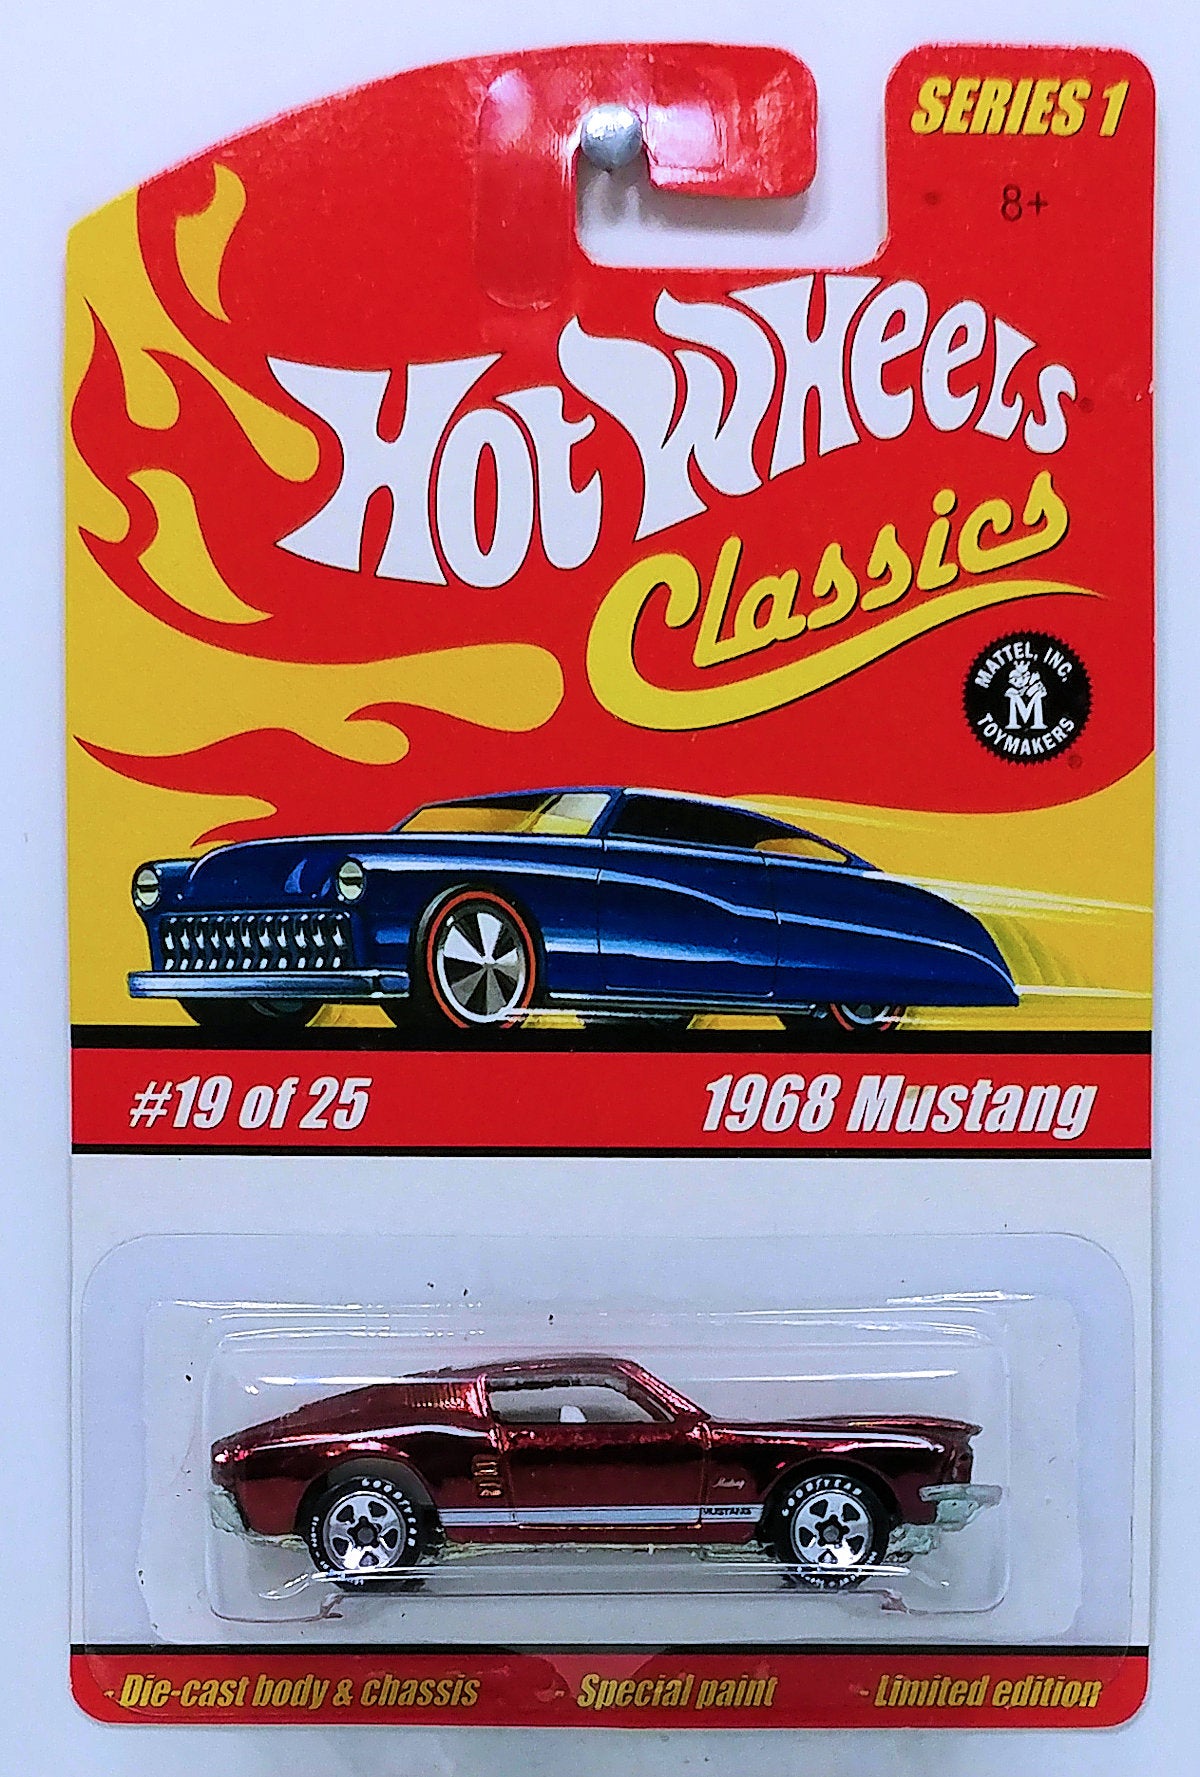 Hot Wheels 2005 - Classics Series 1 # 19/25 - 1968 Mustang - Spectraflame Brown - 5 Spokes & Good Year - Opening Hood - Metal/Metal